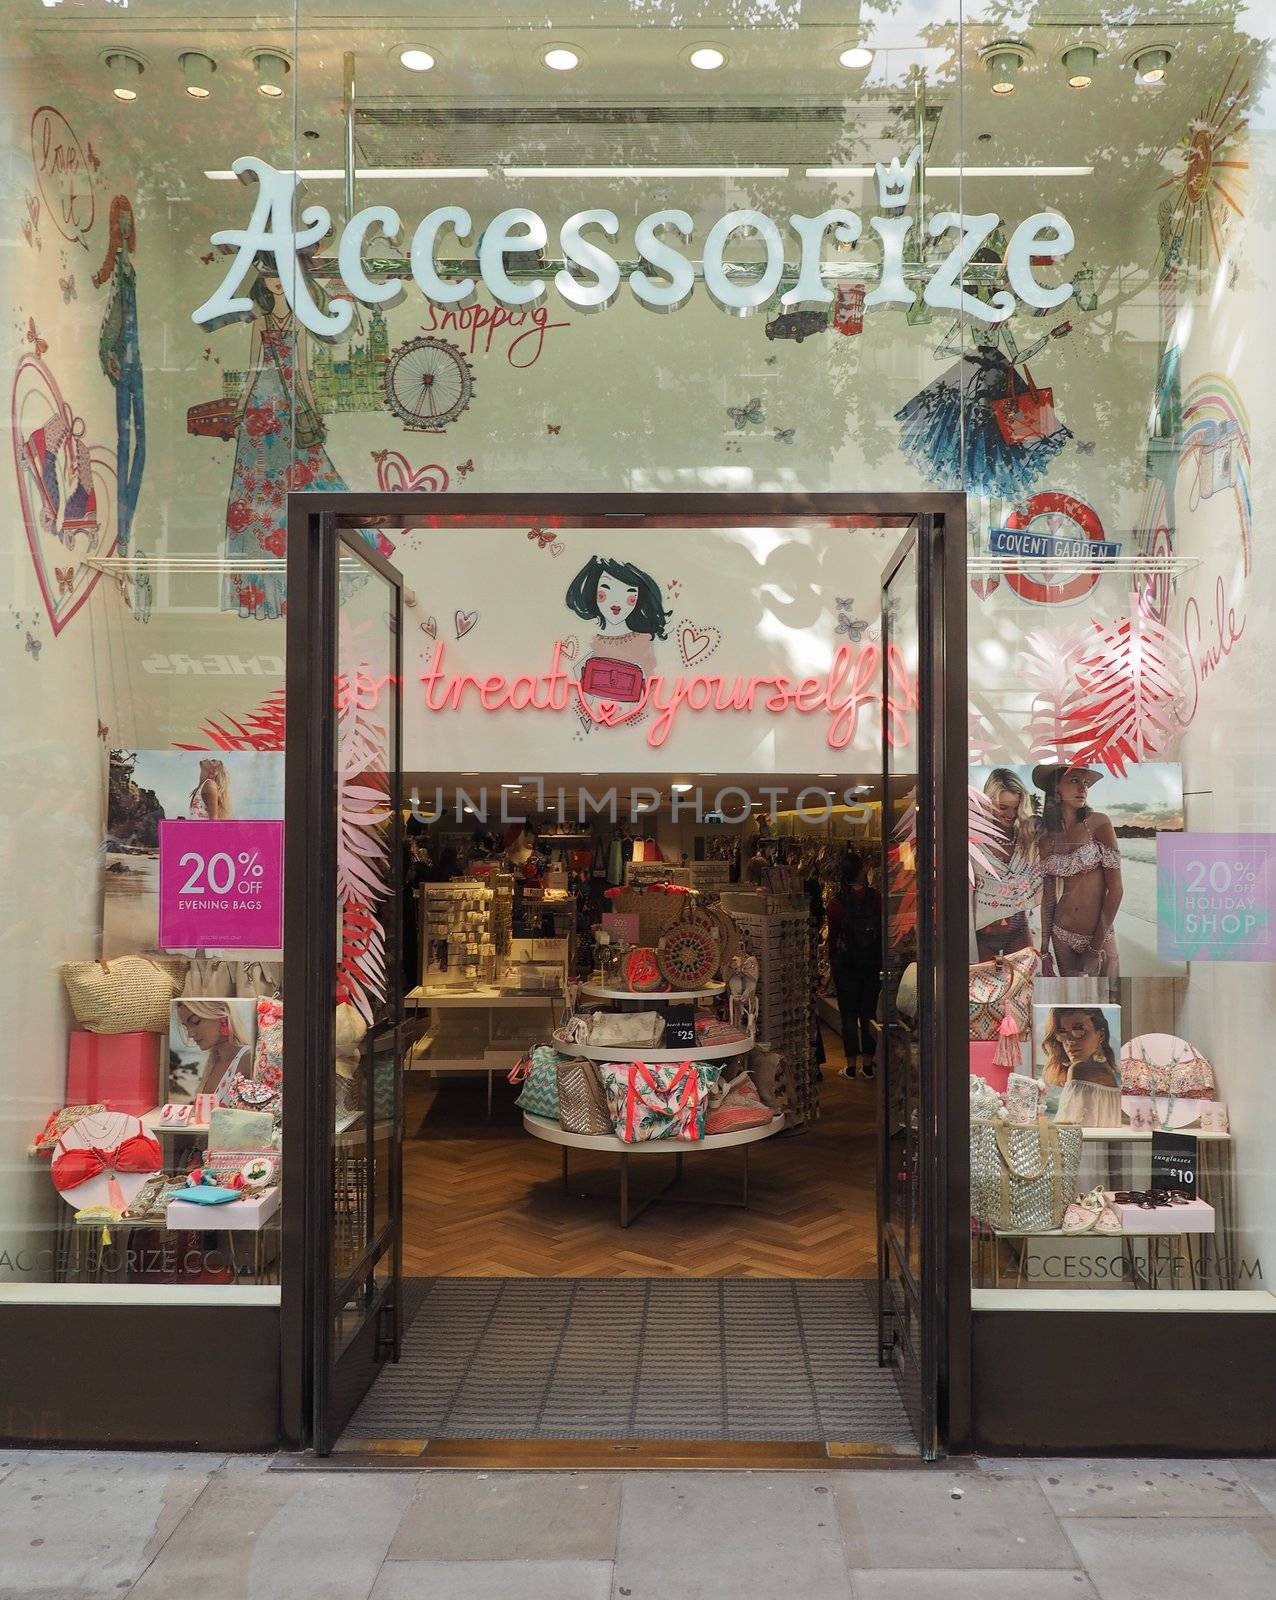 Accessorize storefront in London by claudiodivizia